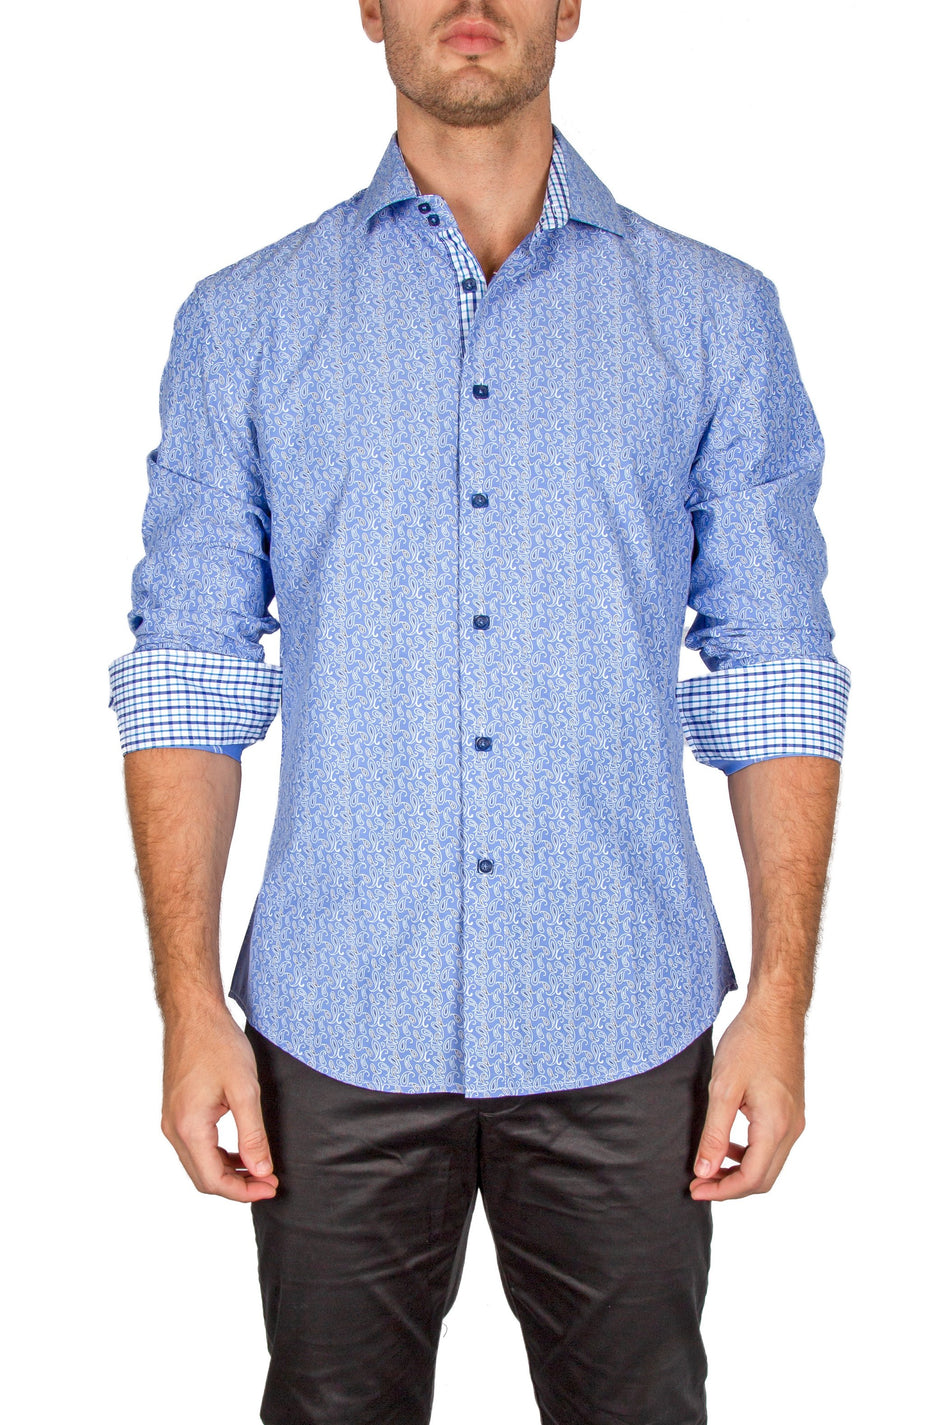 182276-mens-royal-blue-button-up-long-sleeve-dress-shirt